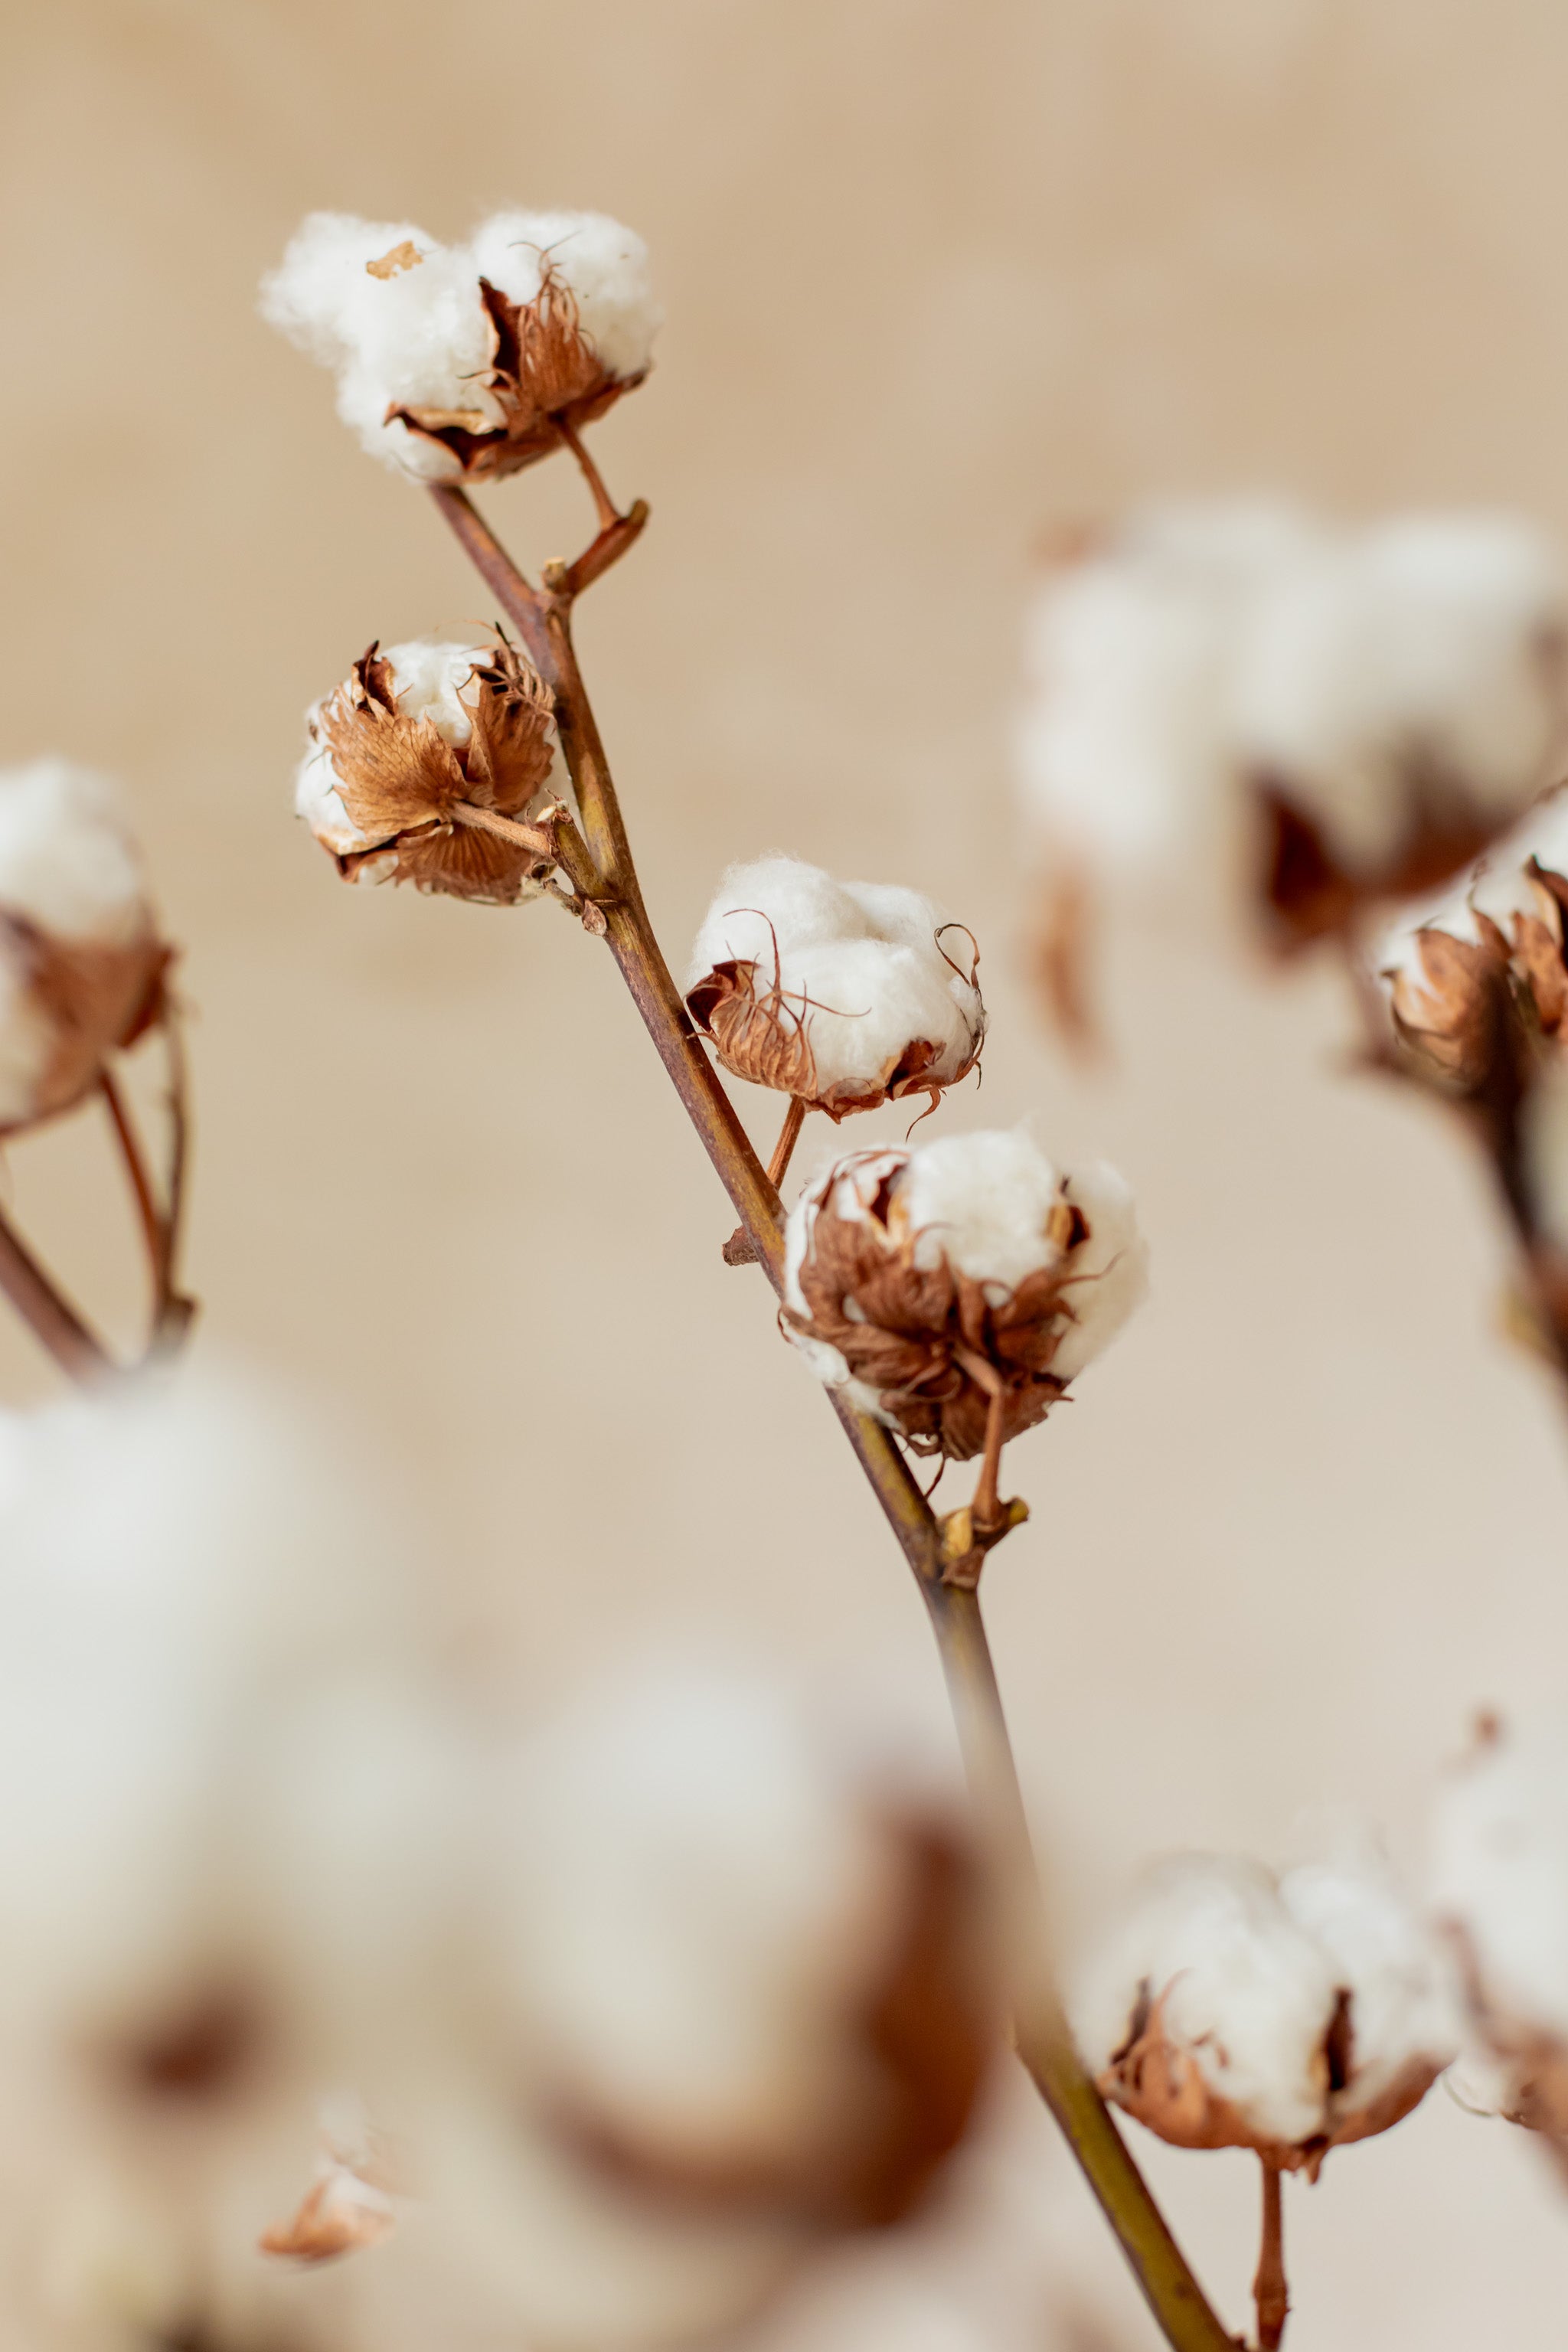 imagen: flores de algodón en decoración navideña